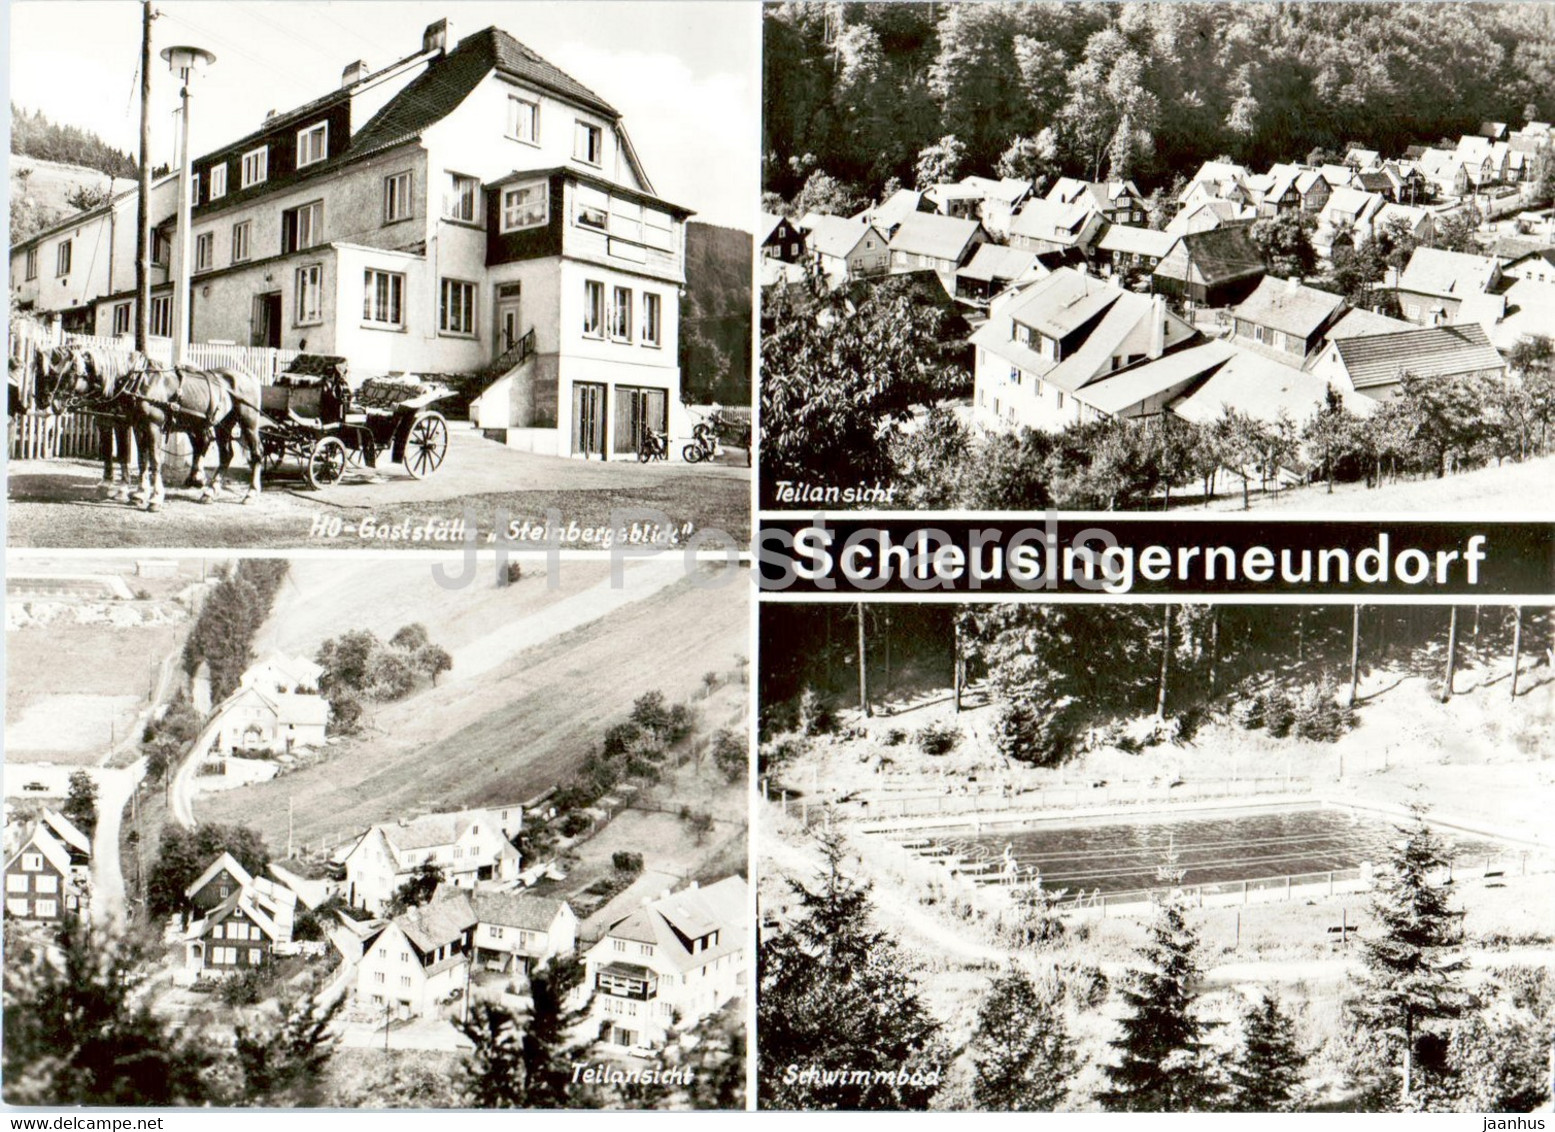 Schleusingerneundorf - HO Gaststatte Steinbergsblick - Horse Carriage - Schwimmbad - Germany DDR - Used - Schleusingen